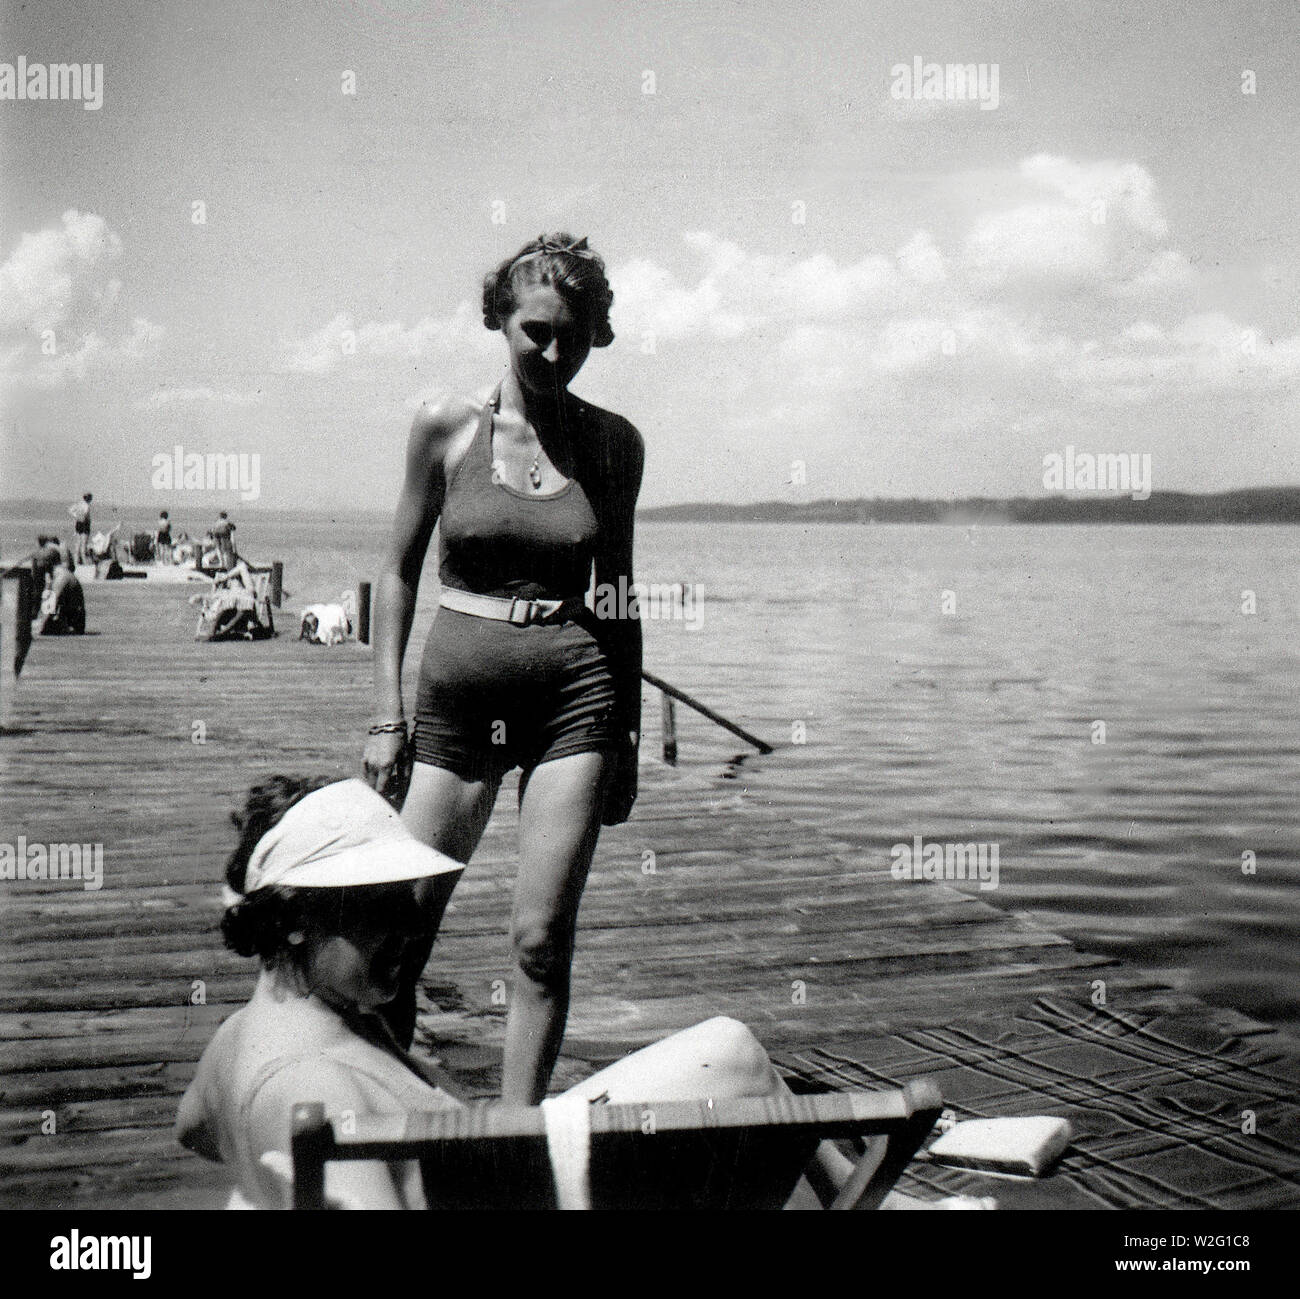 Eva braun braun bathing suit hi-res stock photography and images - Alamy